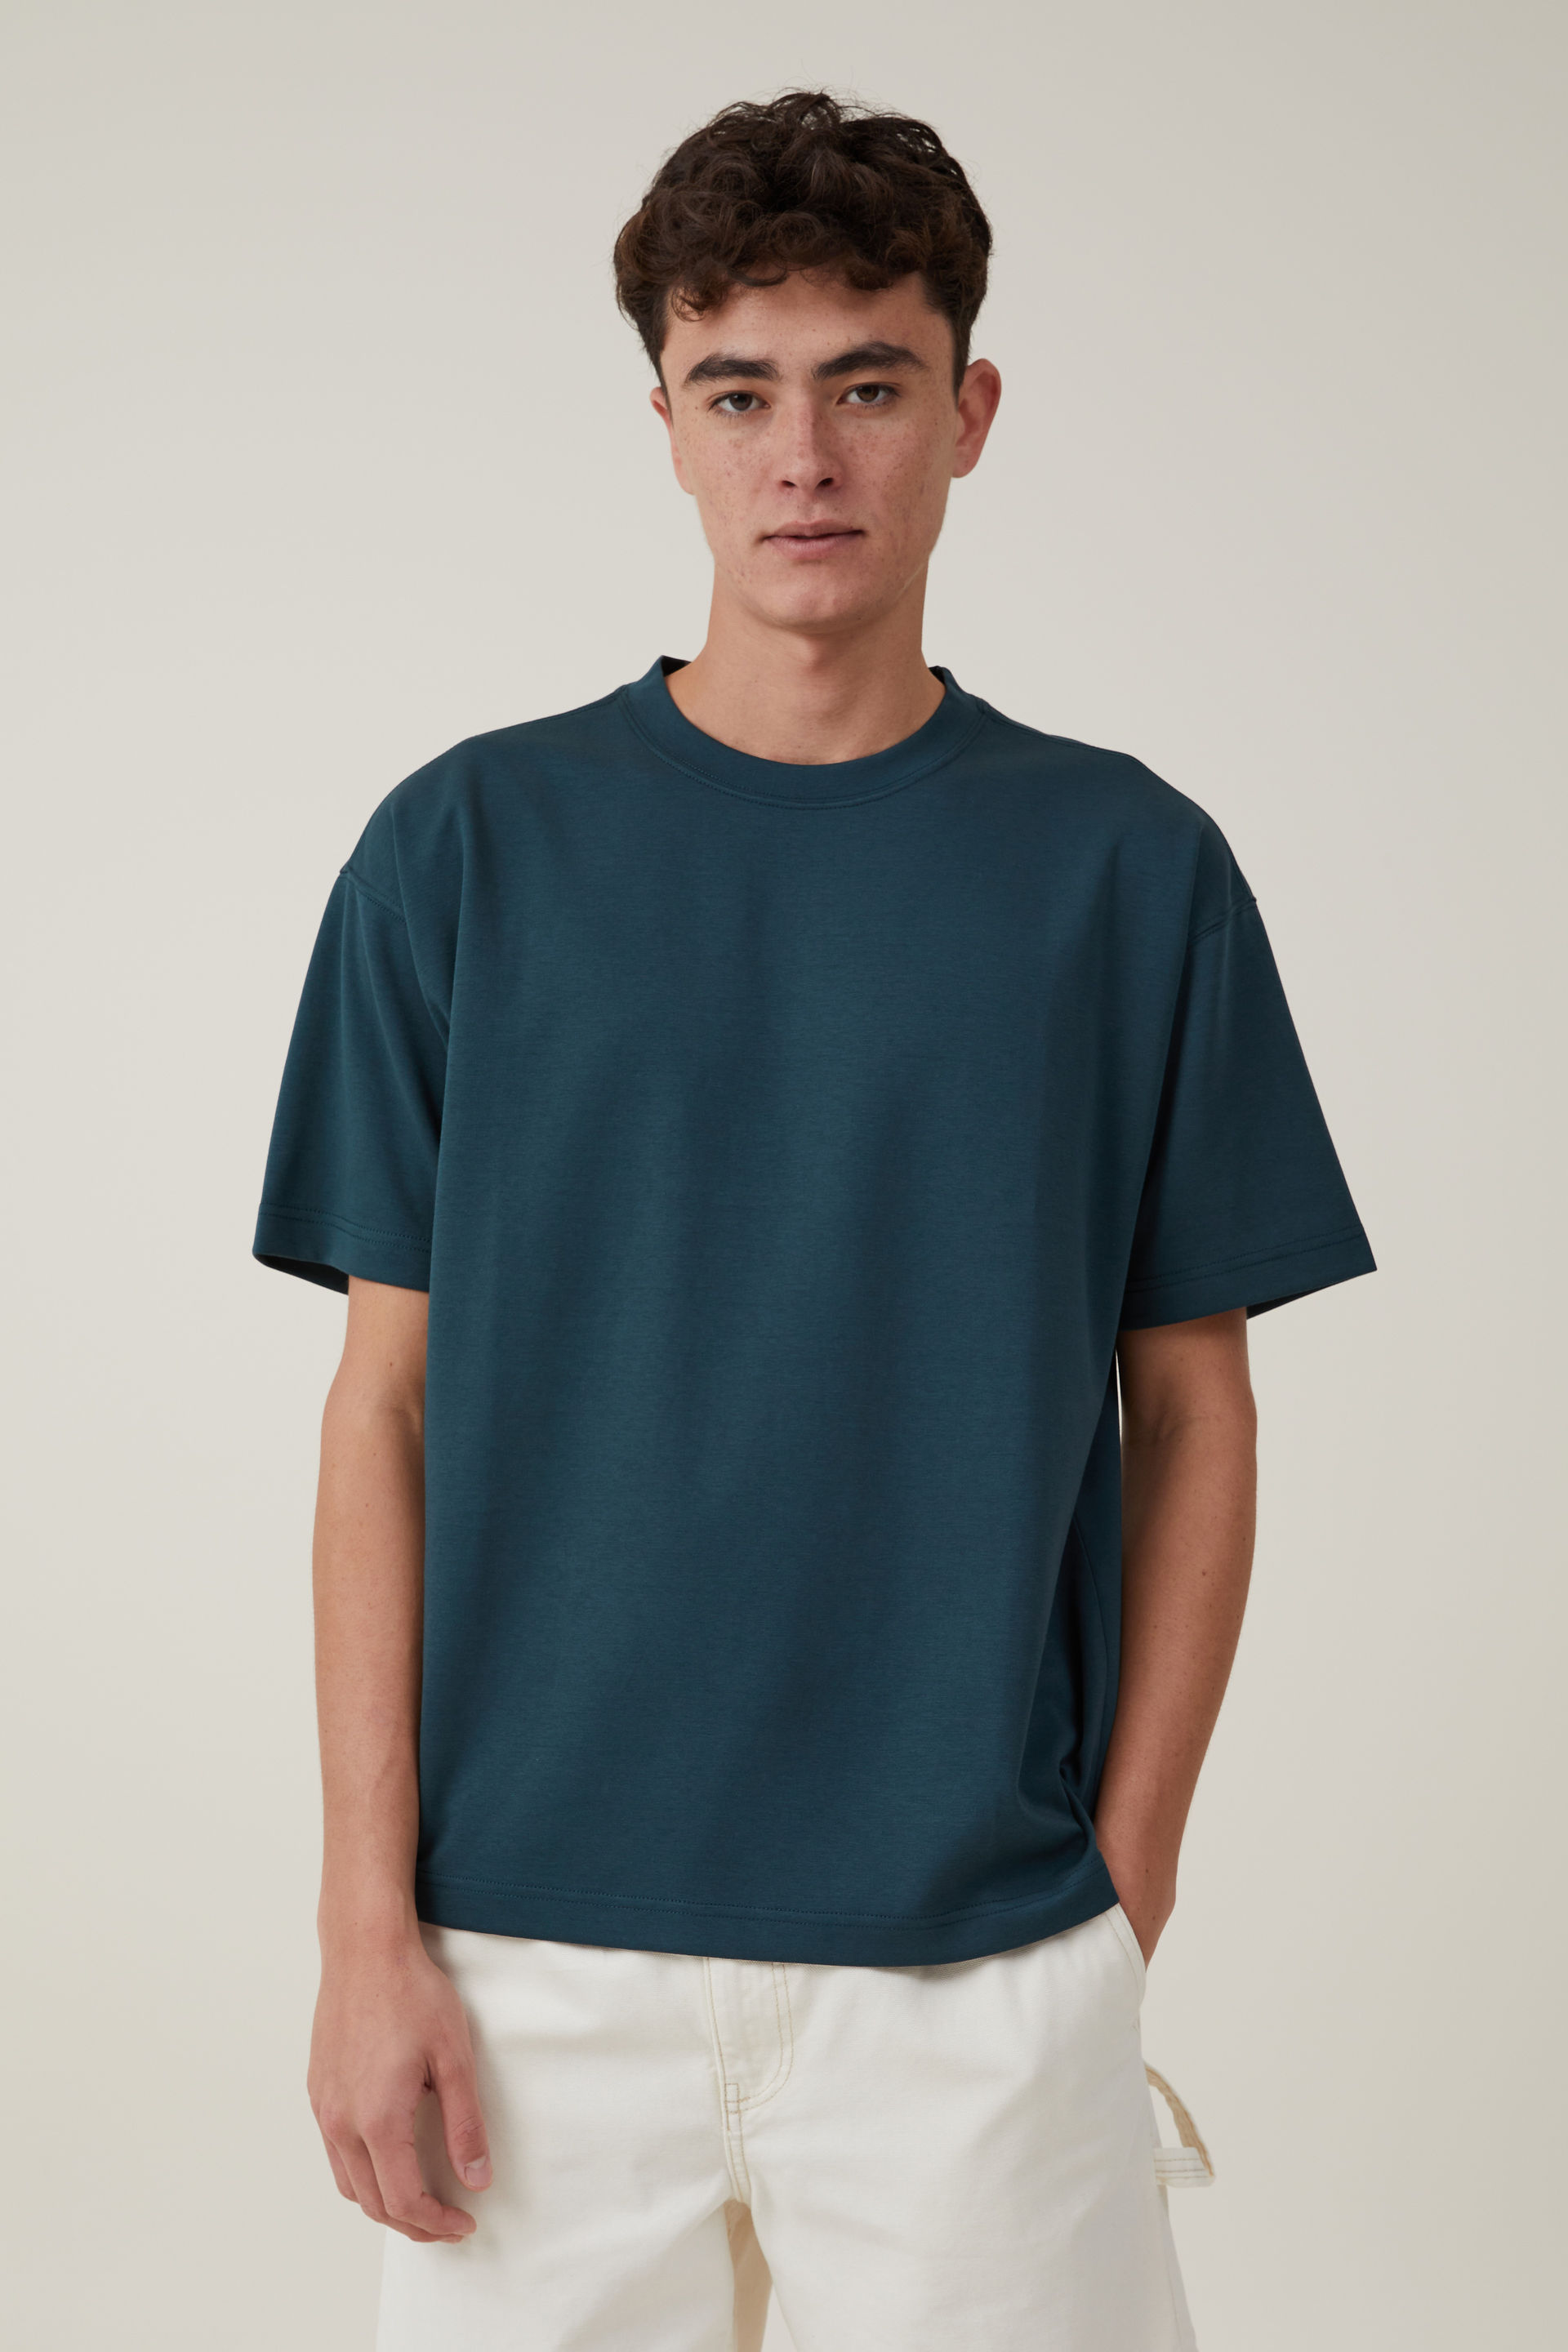 Cotton On Men - Hyperweave T-Shirt - Deep sea teal